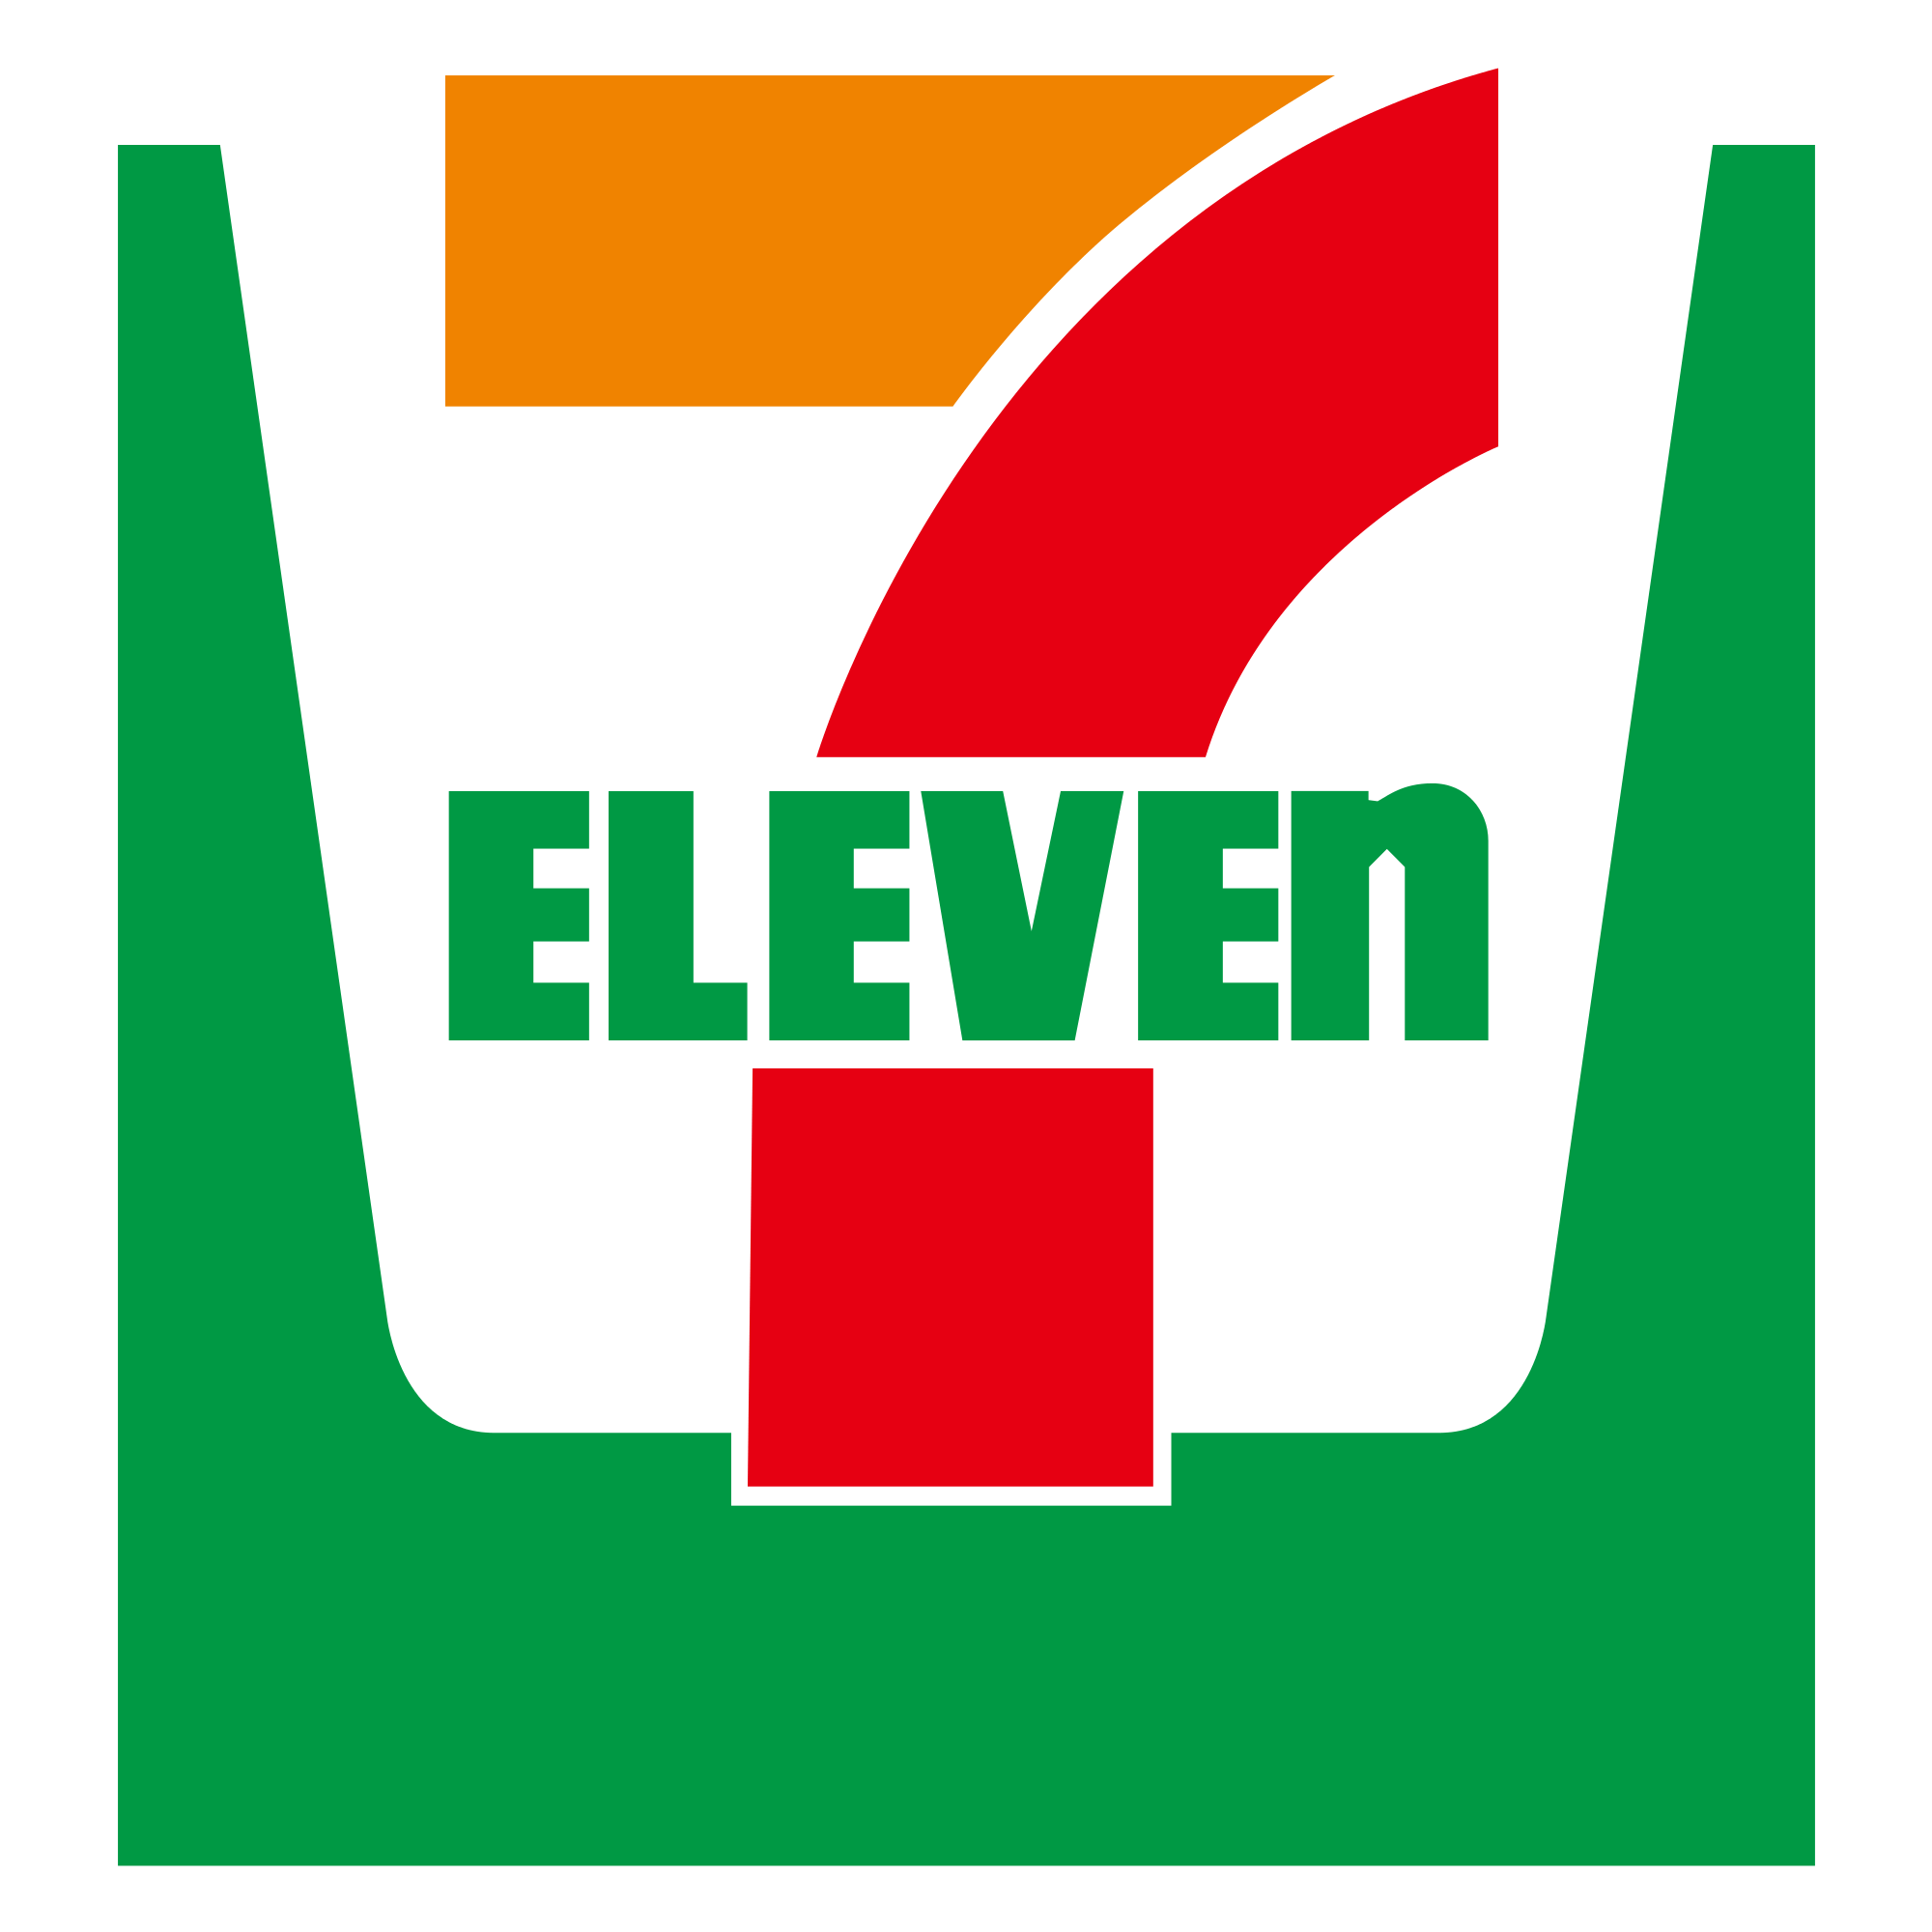 7-Eleven Logo - Seven eleven logo.svg